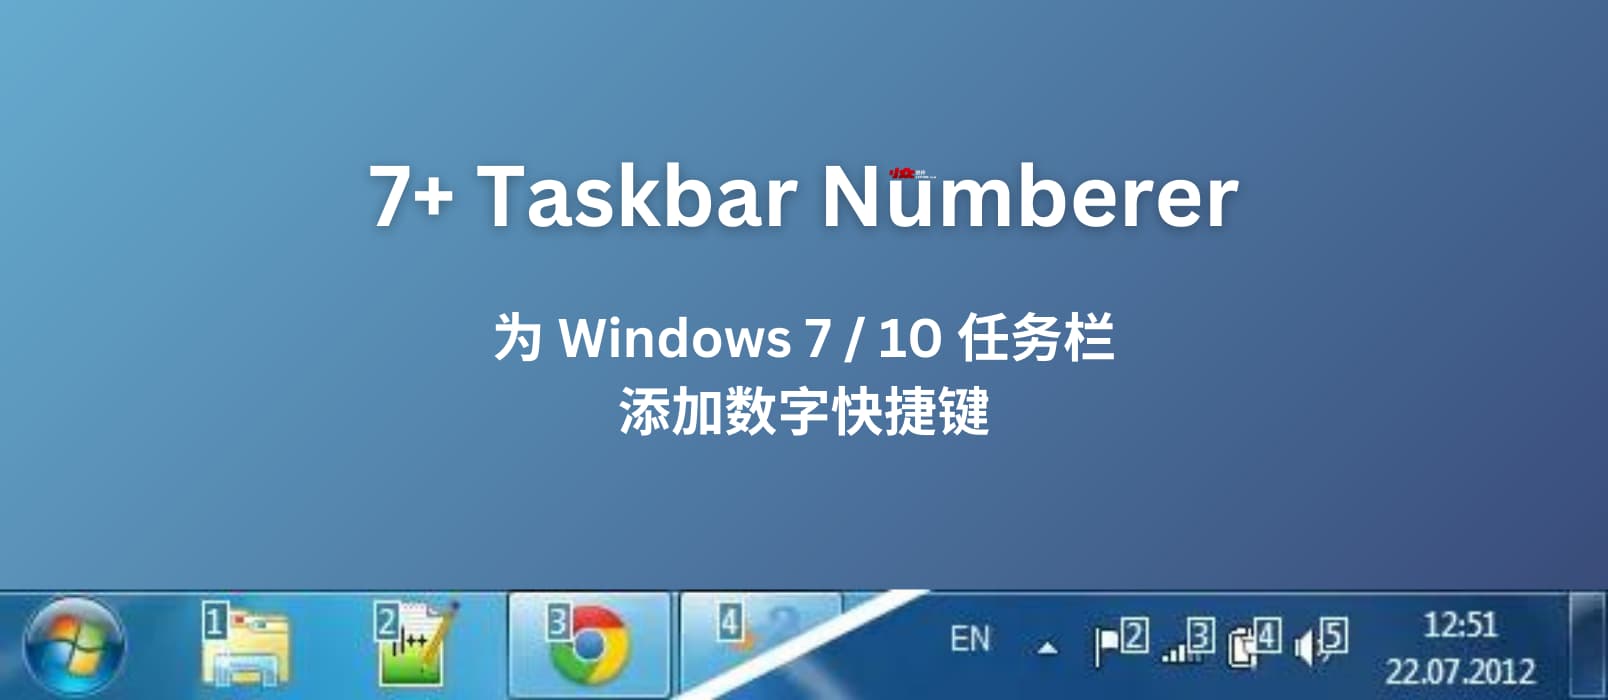 7+ Taskbar Numberer – 为 Windows 任务栏添加数字快捷键，适合语音识别与快捷键用户